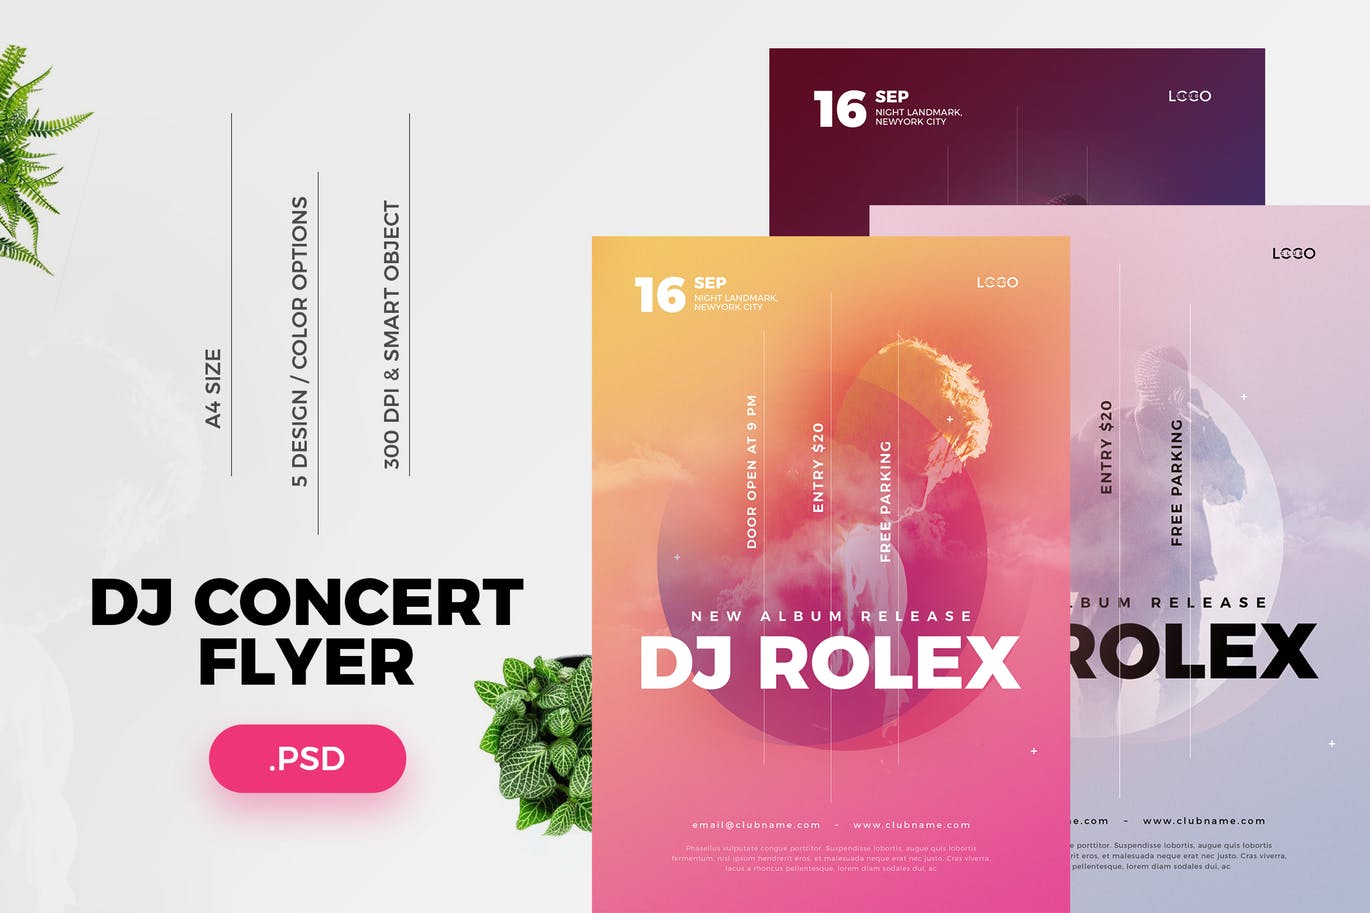 A DJ concert flyer templates